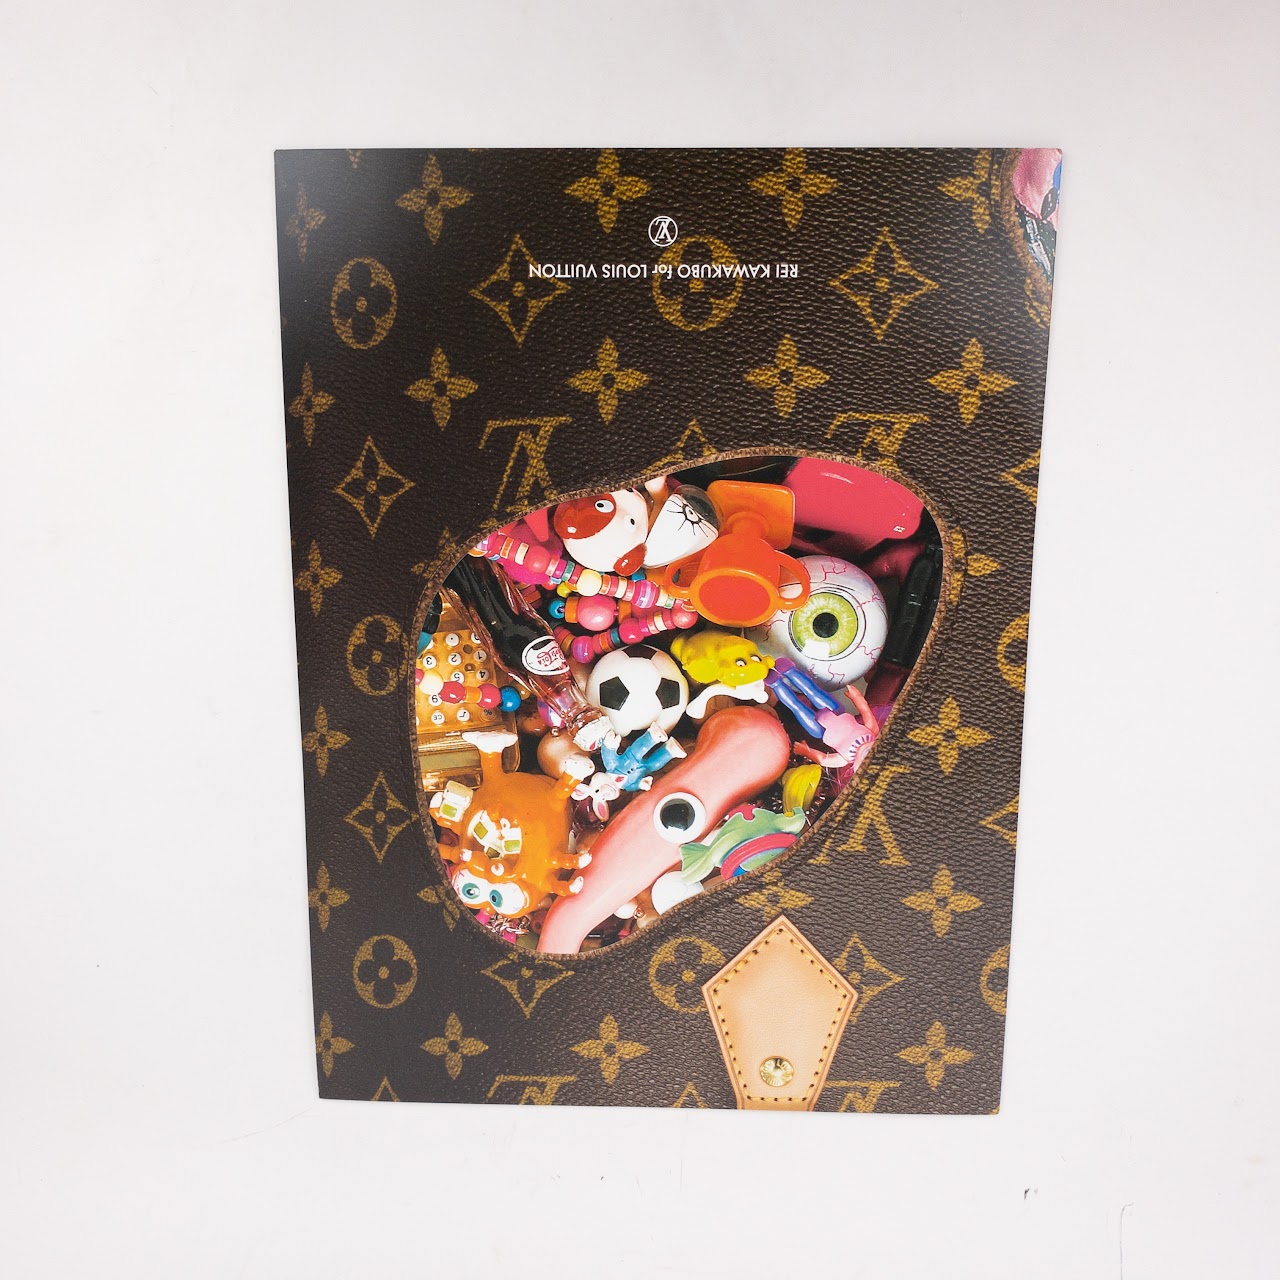 Limited Edition Louis Vuitton x Rei Kawakubo Iconoclasts Monogram